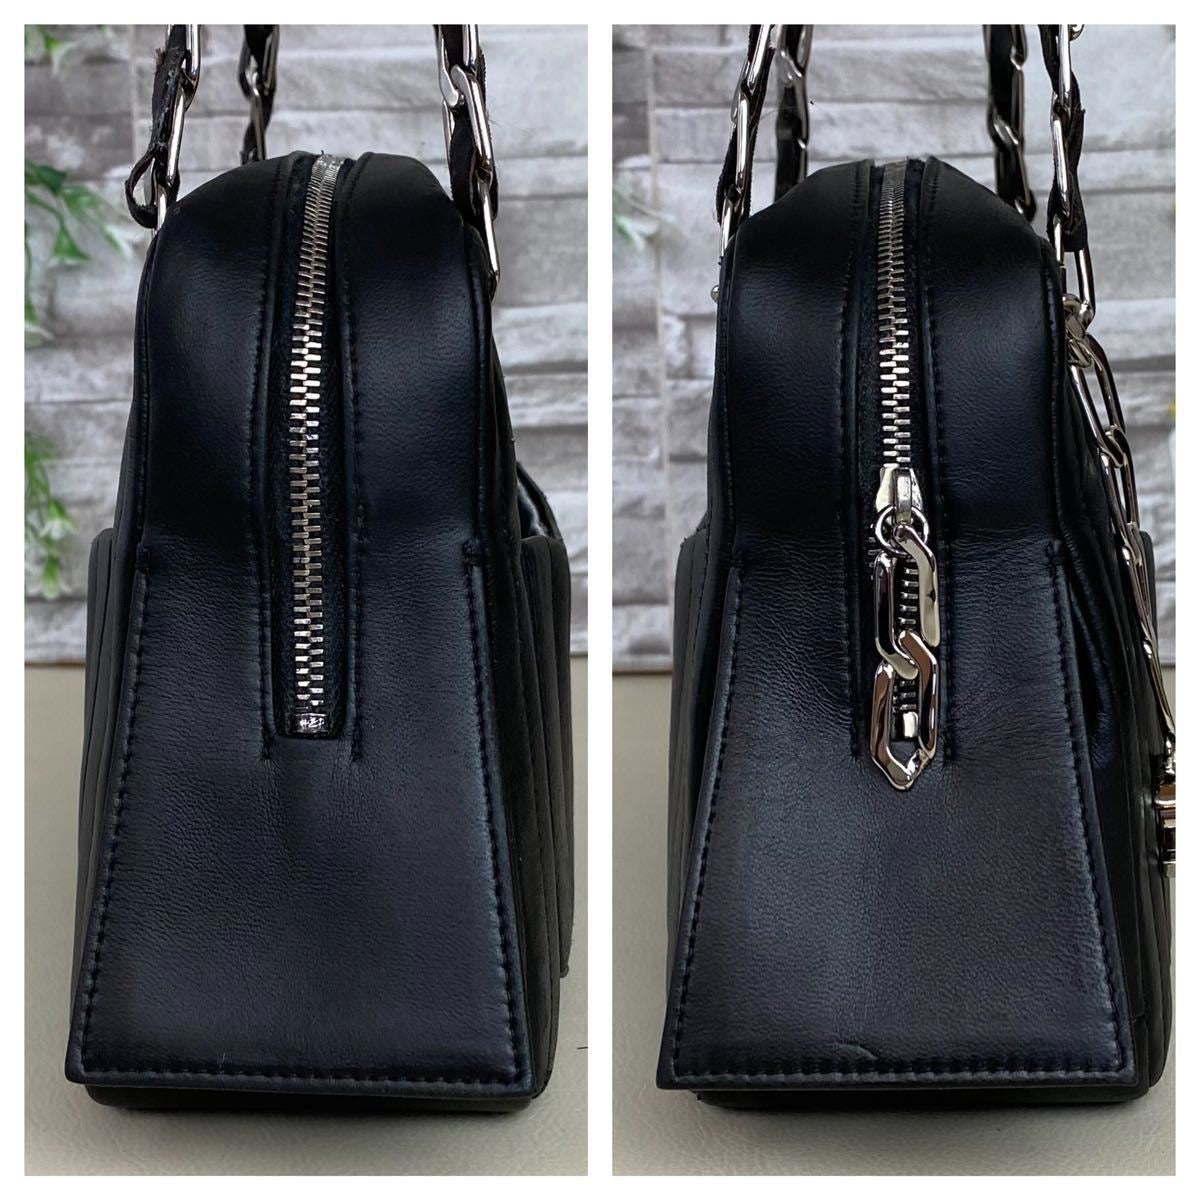 Chanel handbag bag black chain good condition